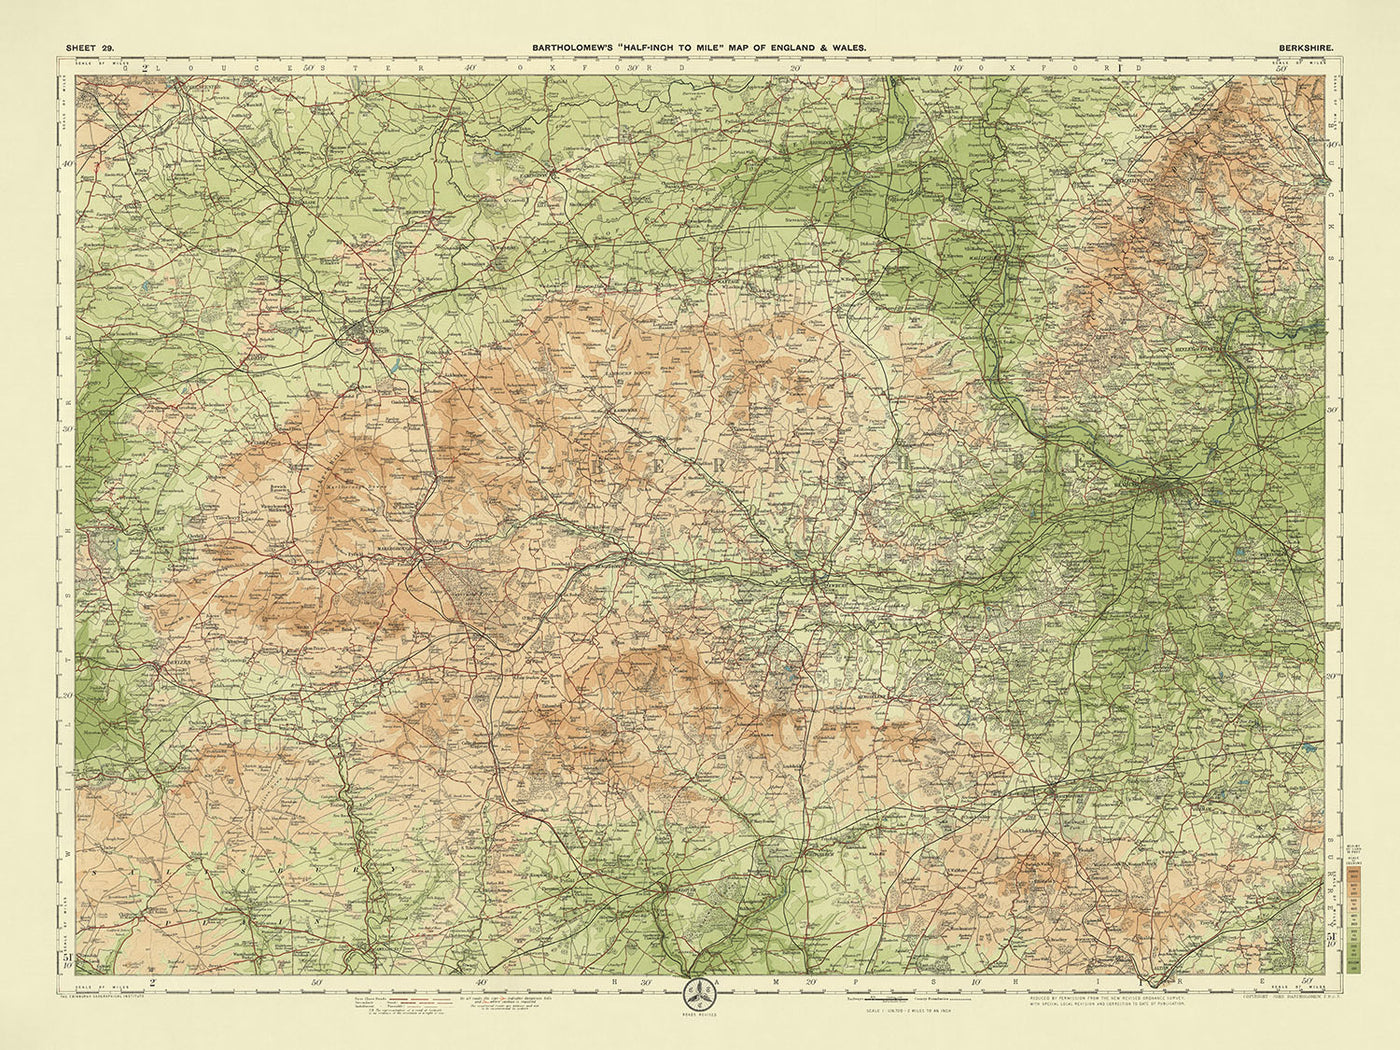 Antiguo mapa OS de Berkshire por Bartolomé, 1901: Reading, Windsor, Thames, Castillo de Windsor, Downs, Chilterns